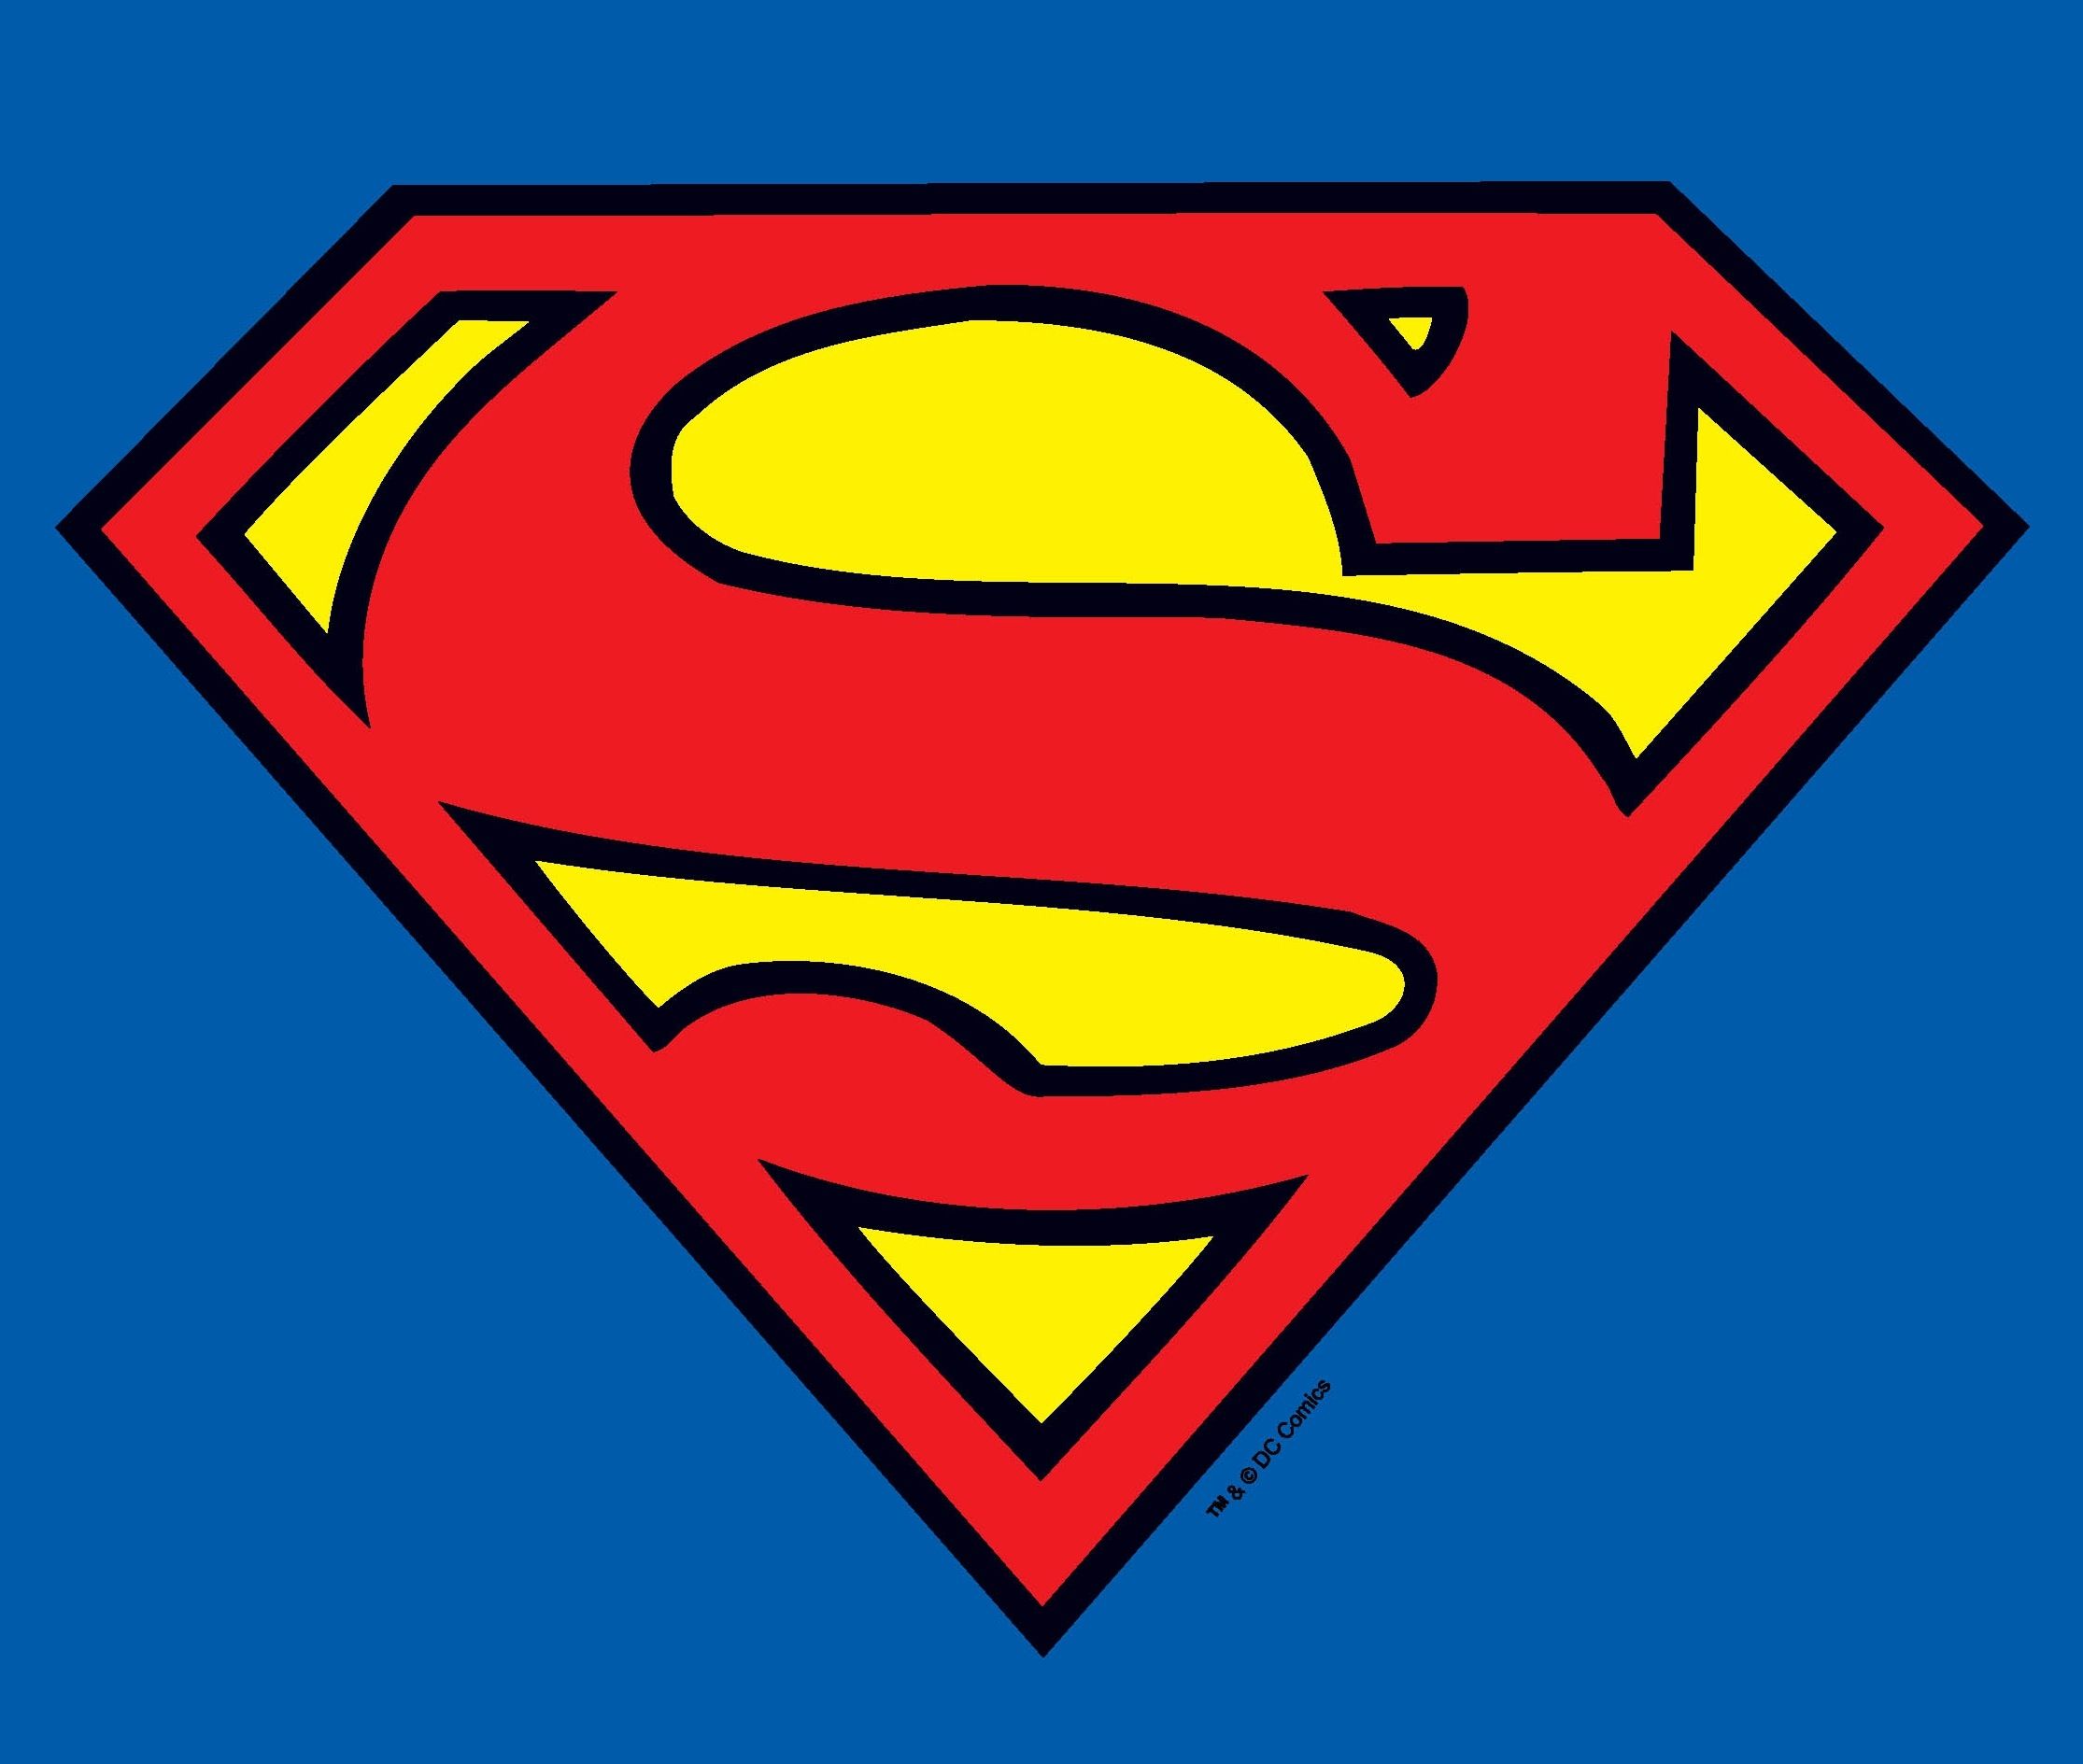 Drawings to Trace. Superman logo, Hero